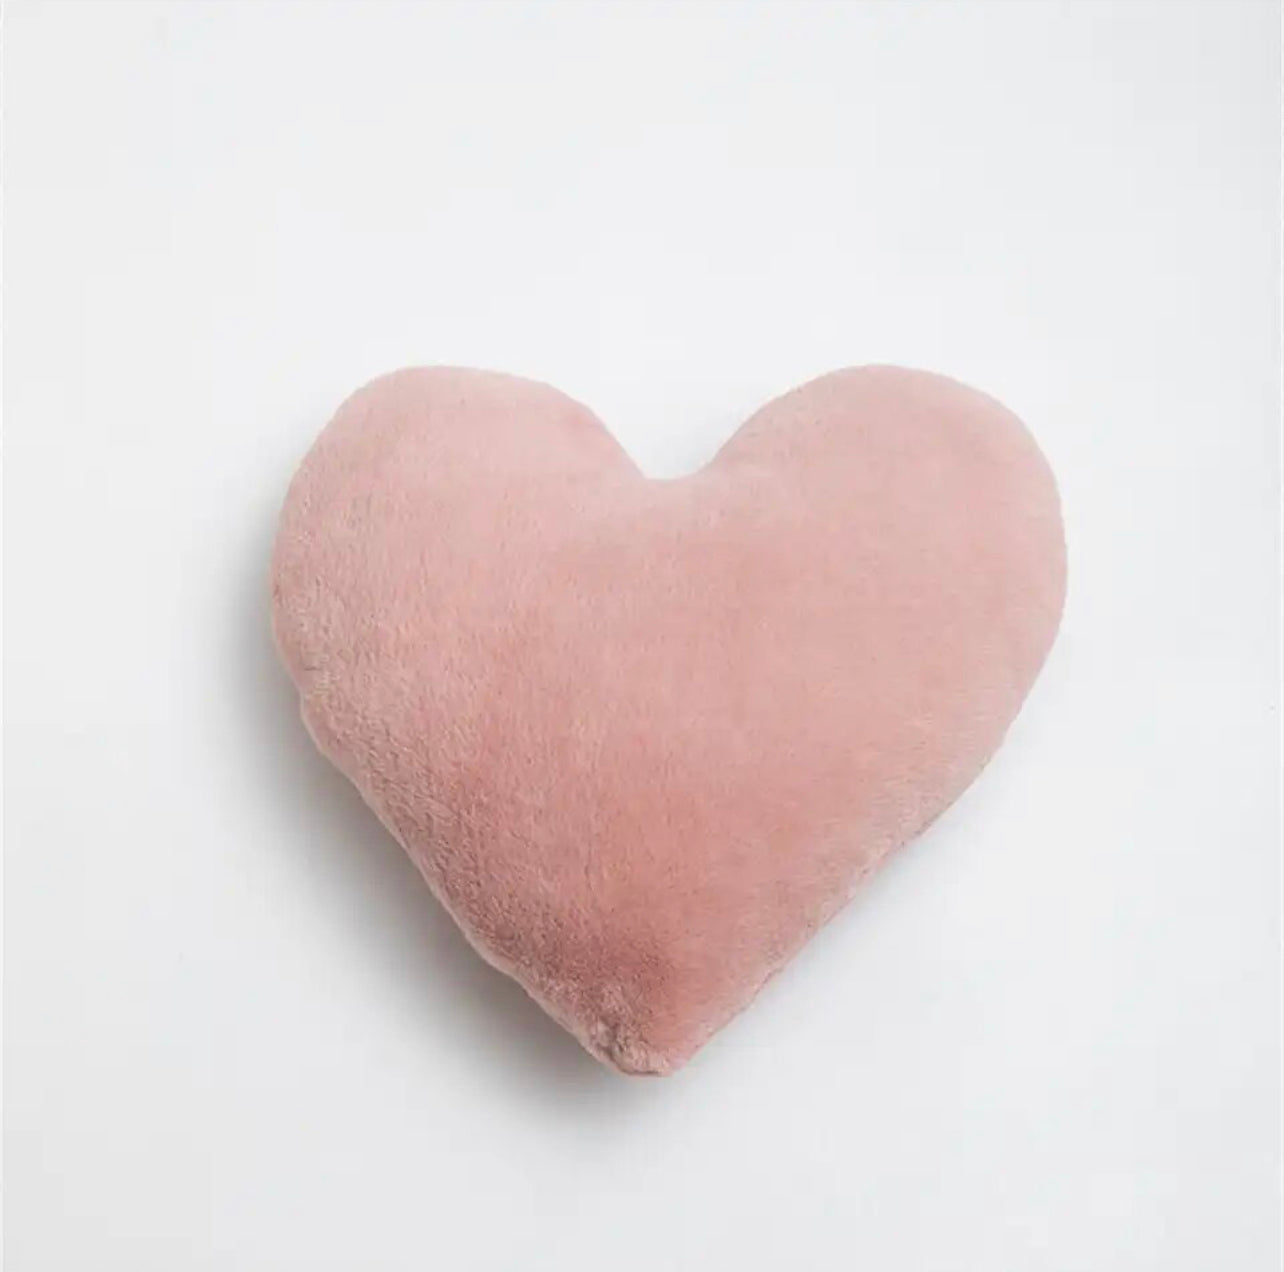 The Heart Pink Cushion